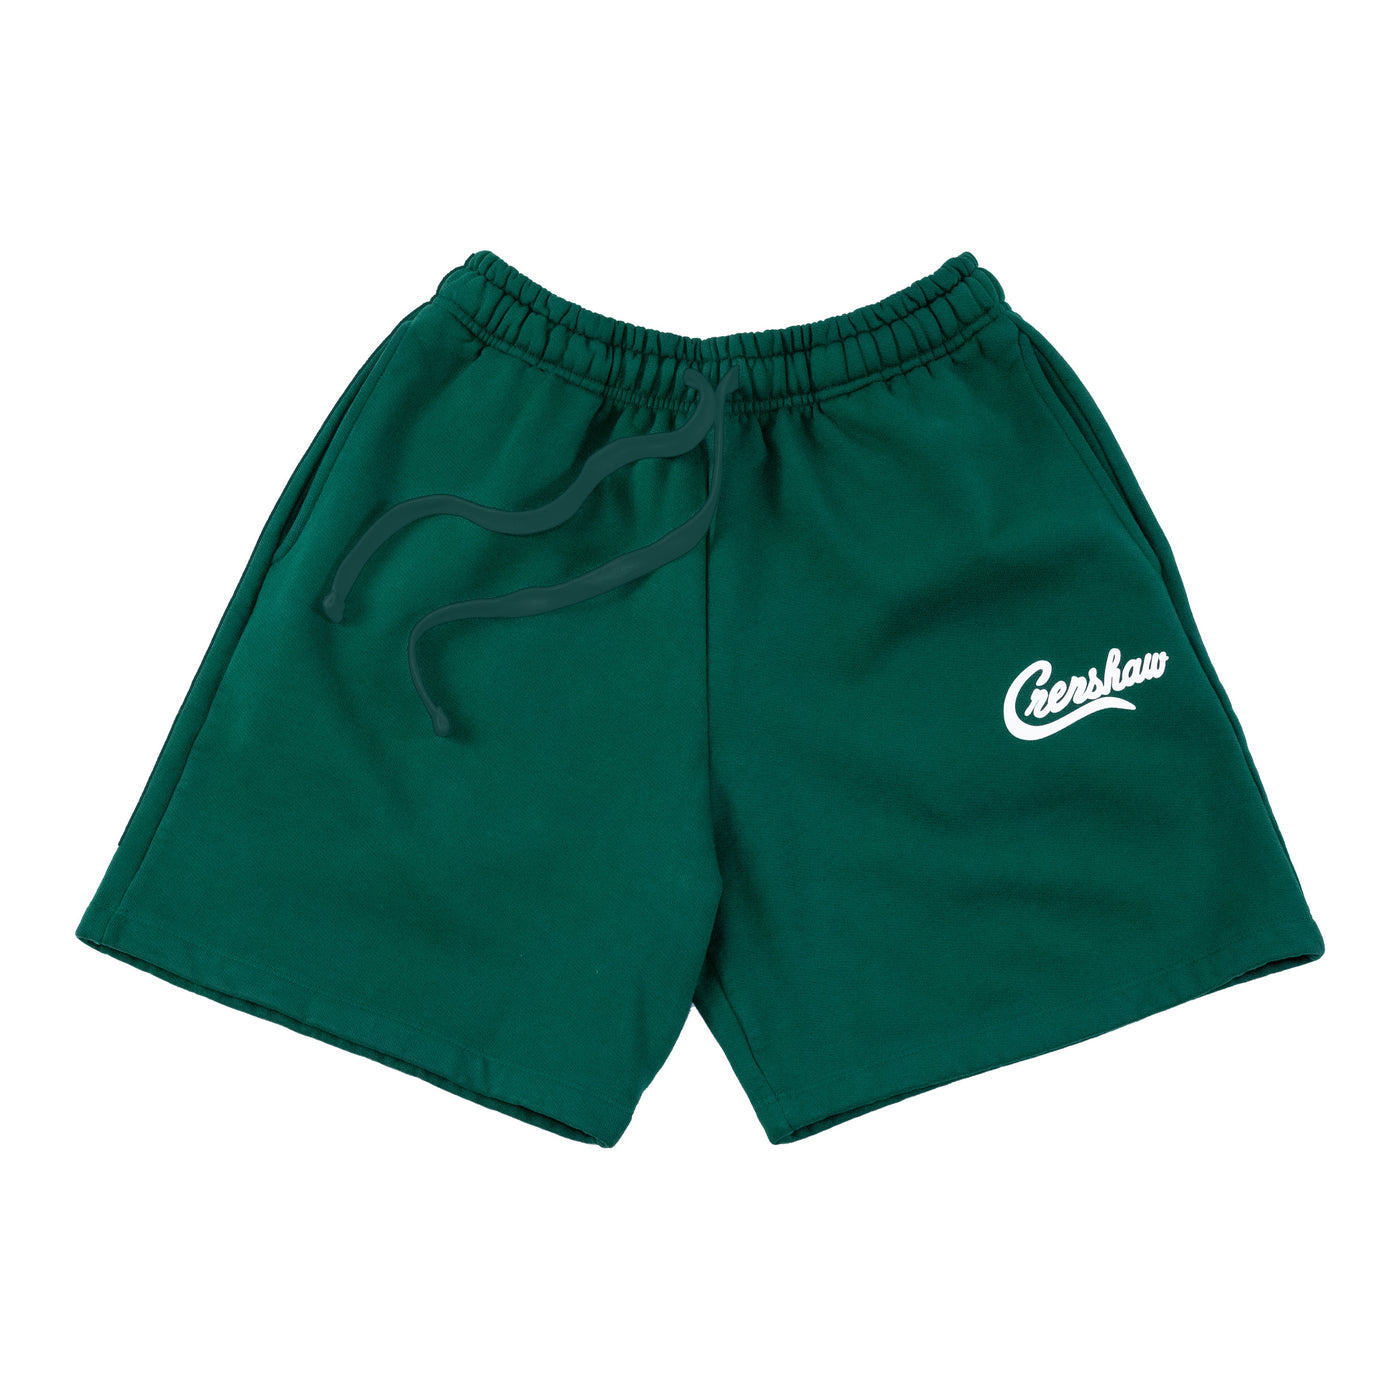 Crenshaw Classic LA Shorts - Green/White